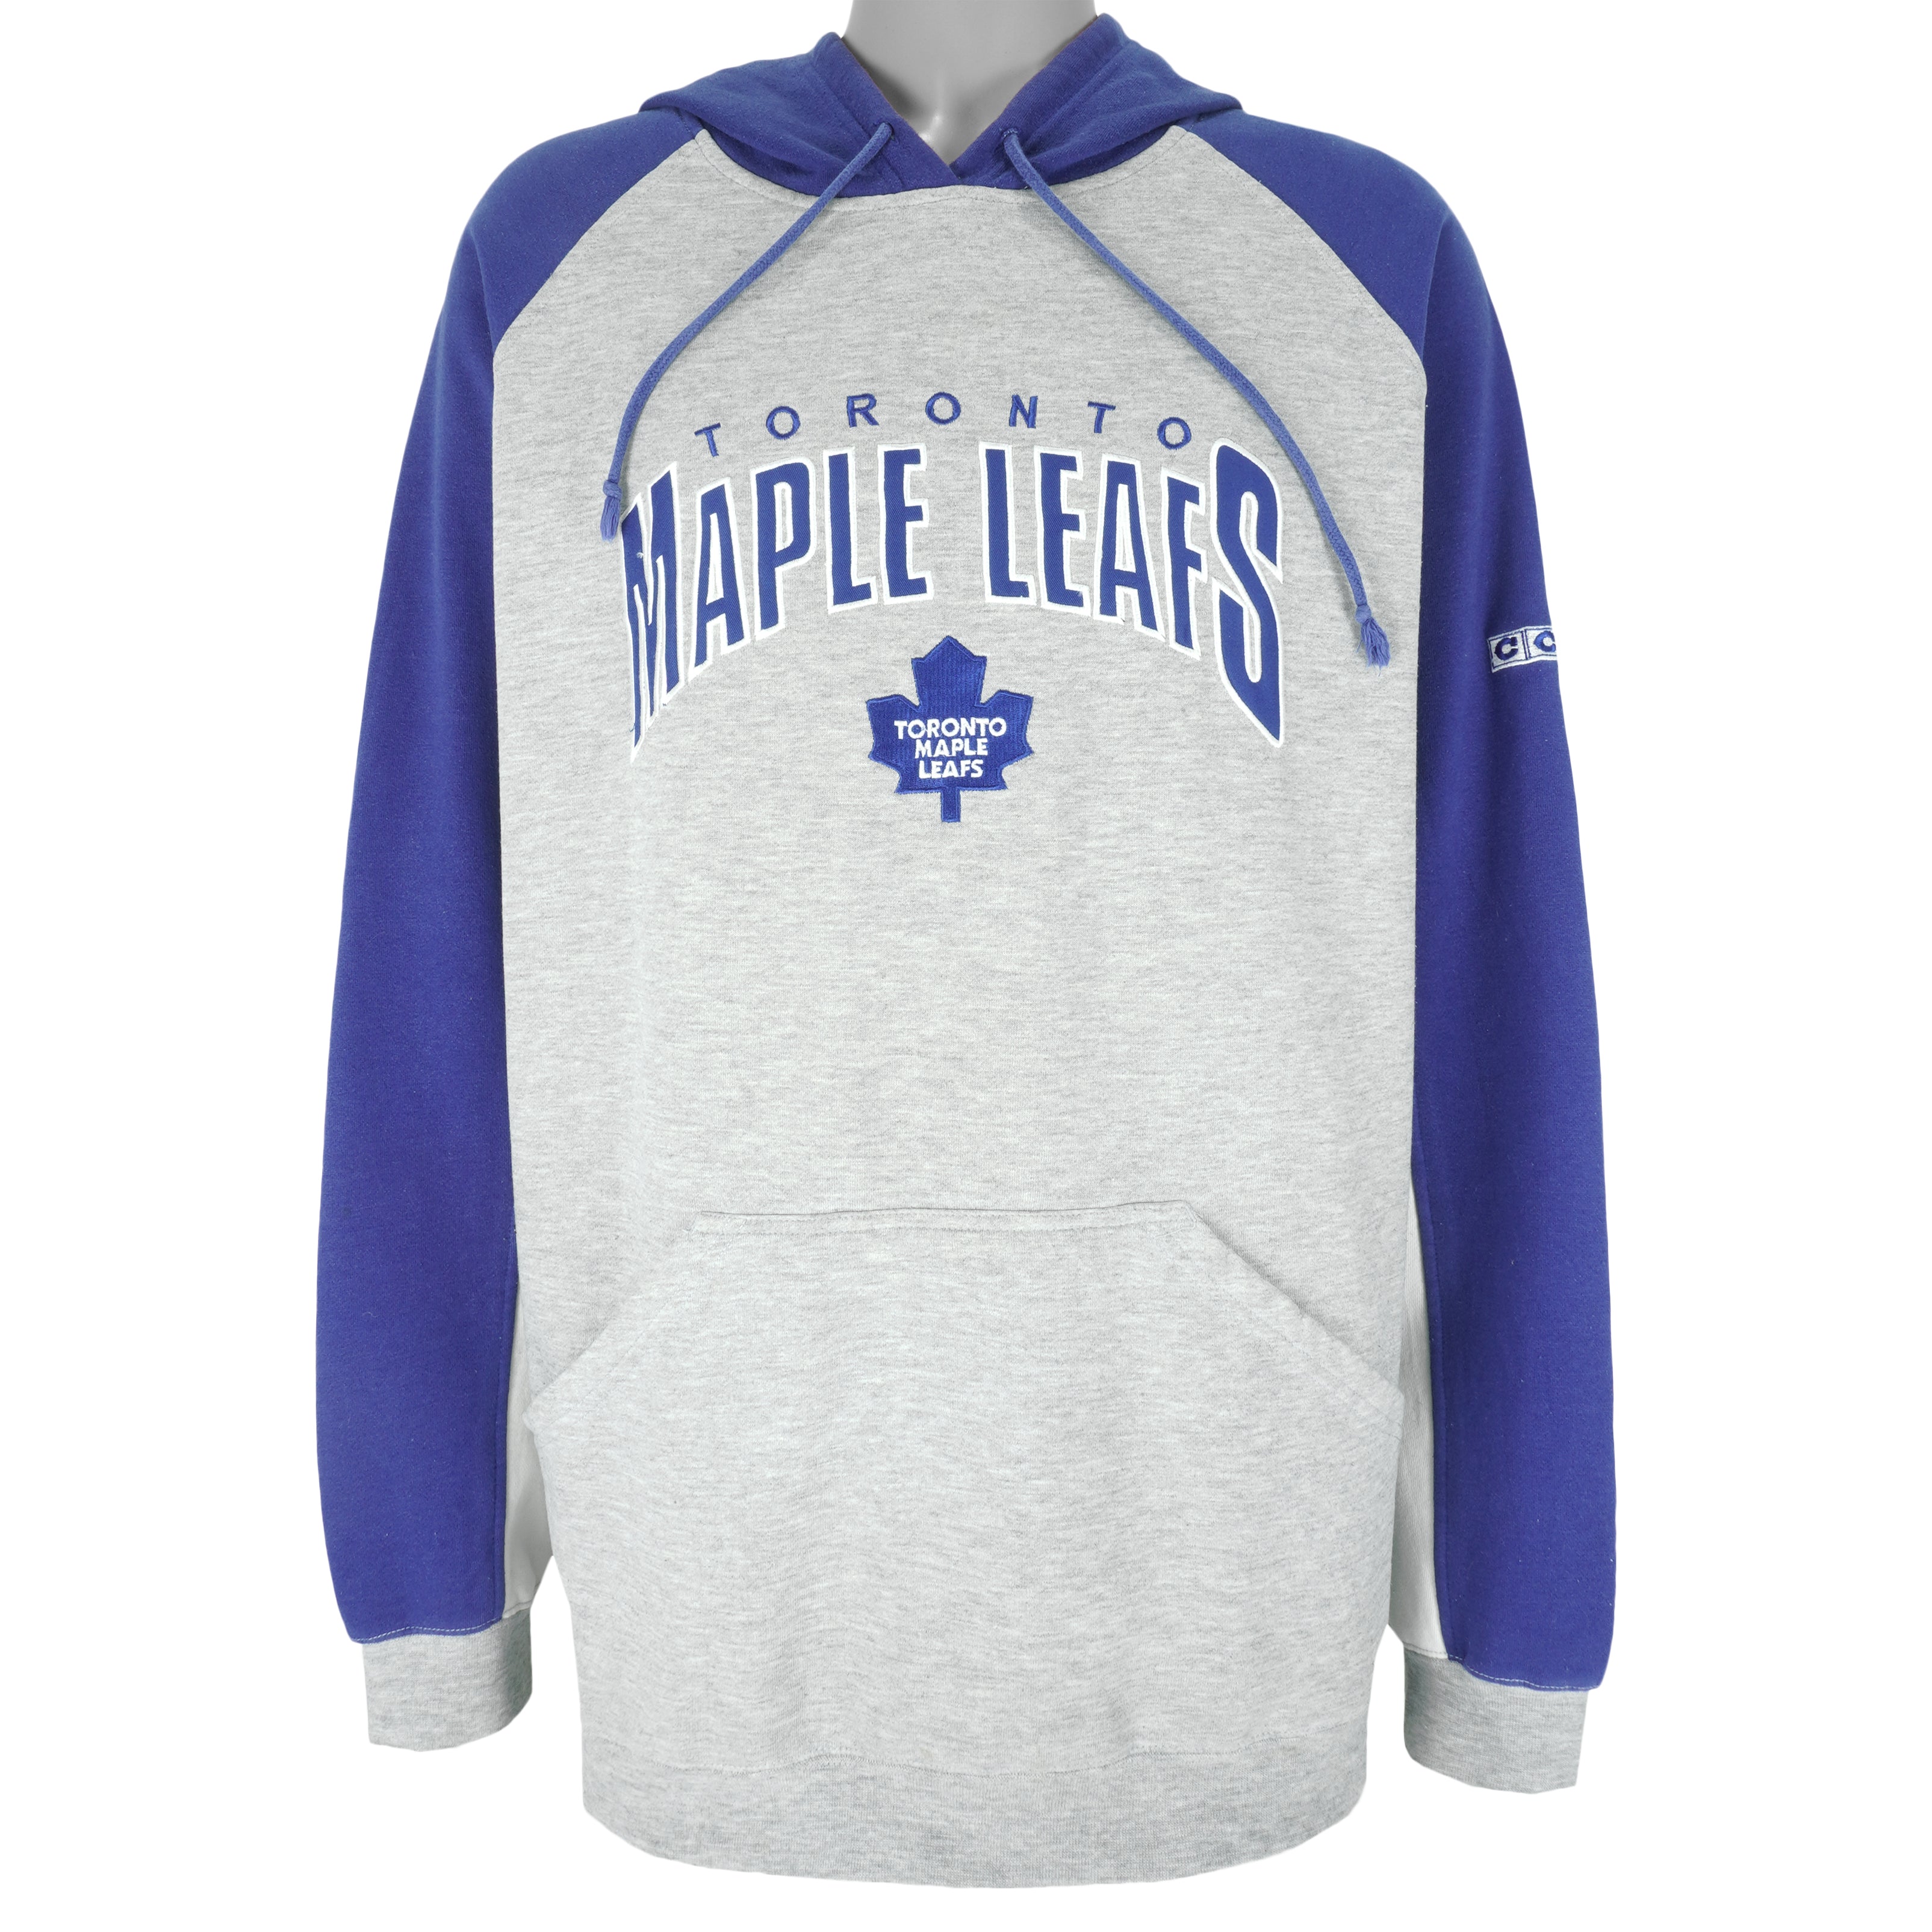 Vintage 90s Toronto Maple Leafs Hoodie - Trends Bedding